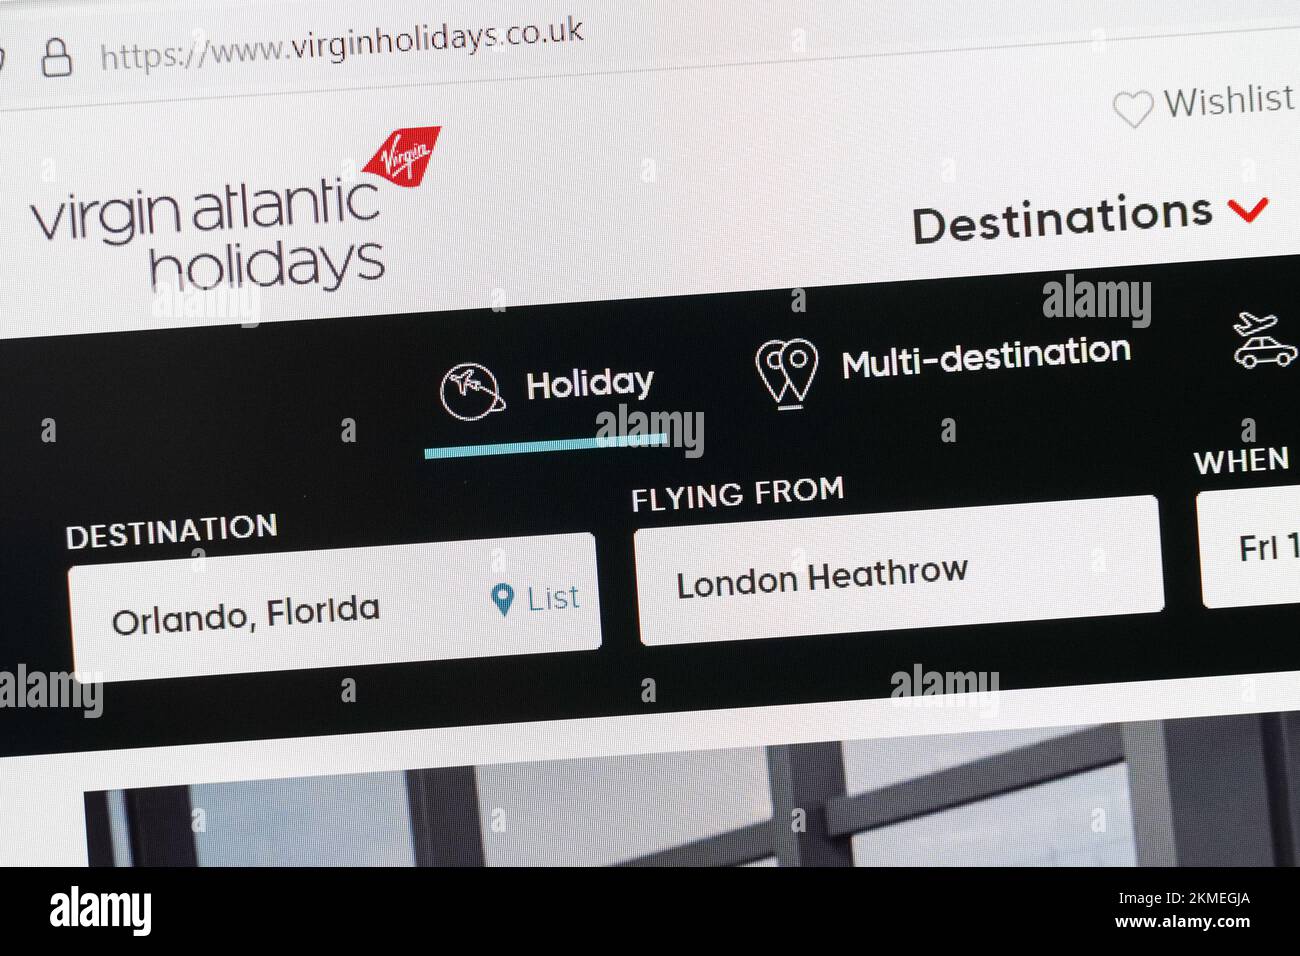 Virgin Atlantic Holidays website Stock Photo